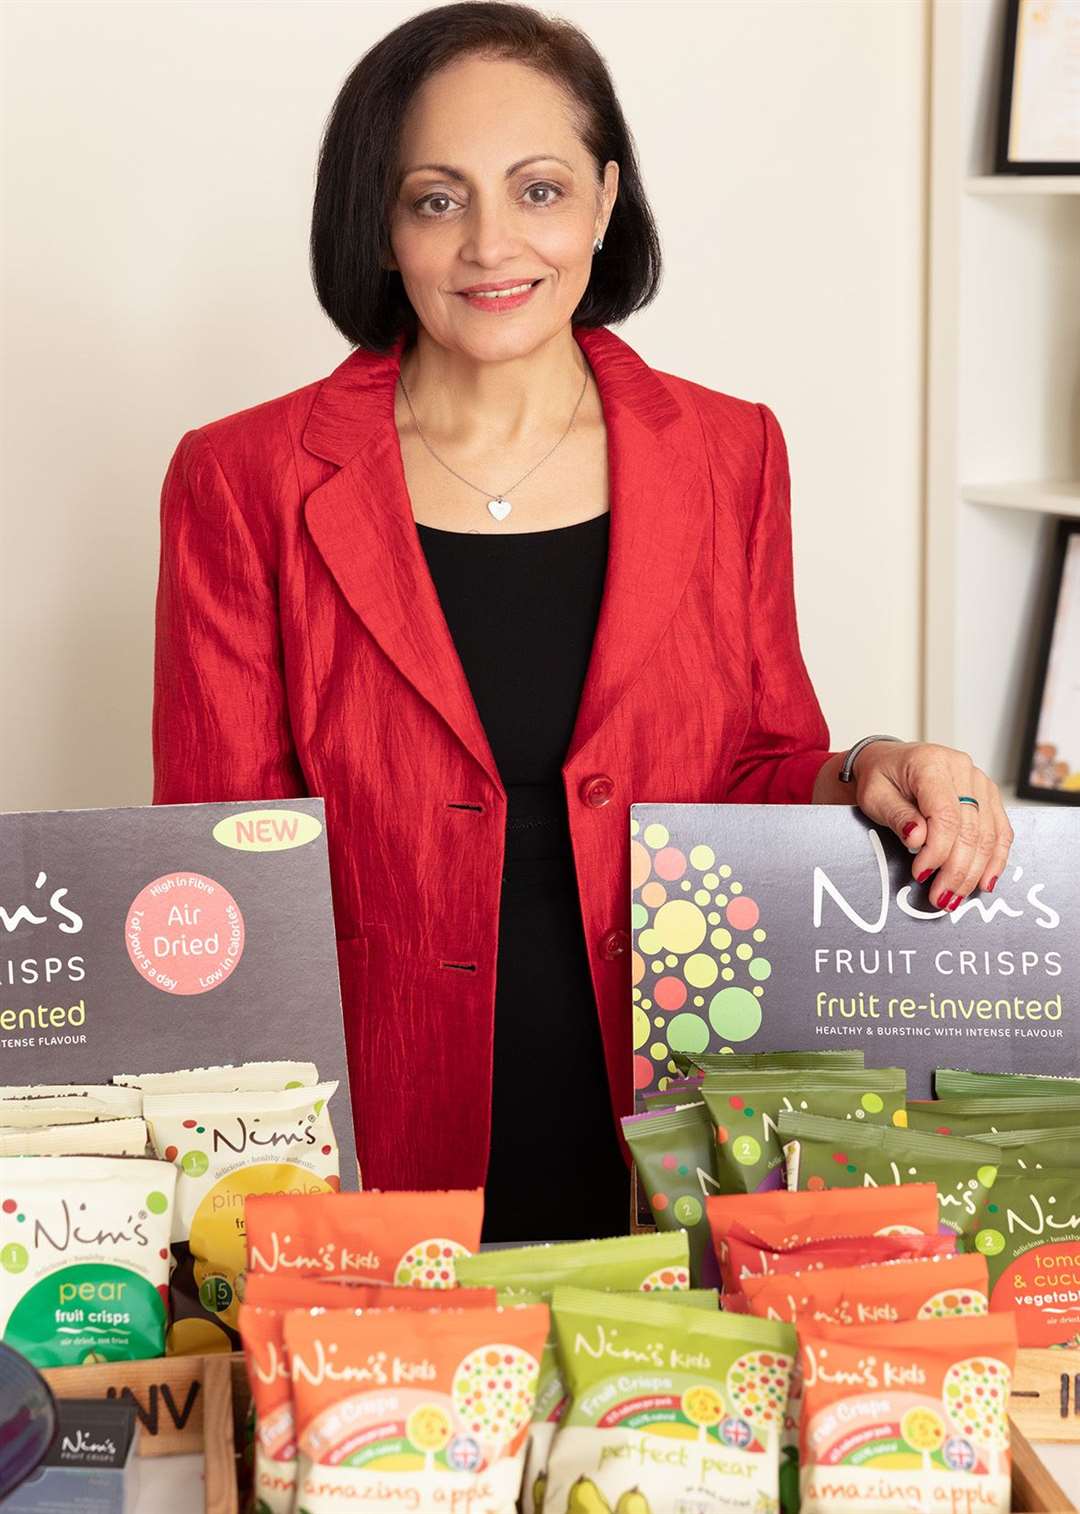 Nimisha Raja, chief executive of Nim's Fruit Crips